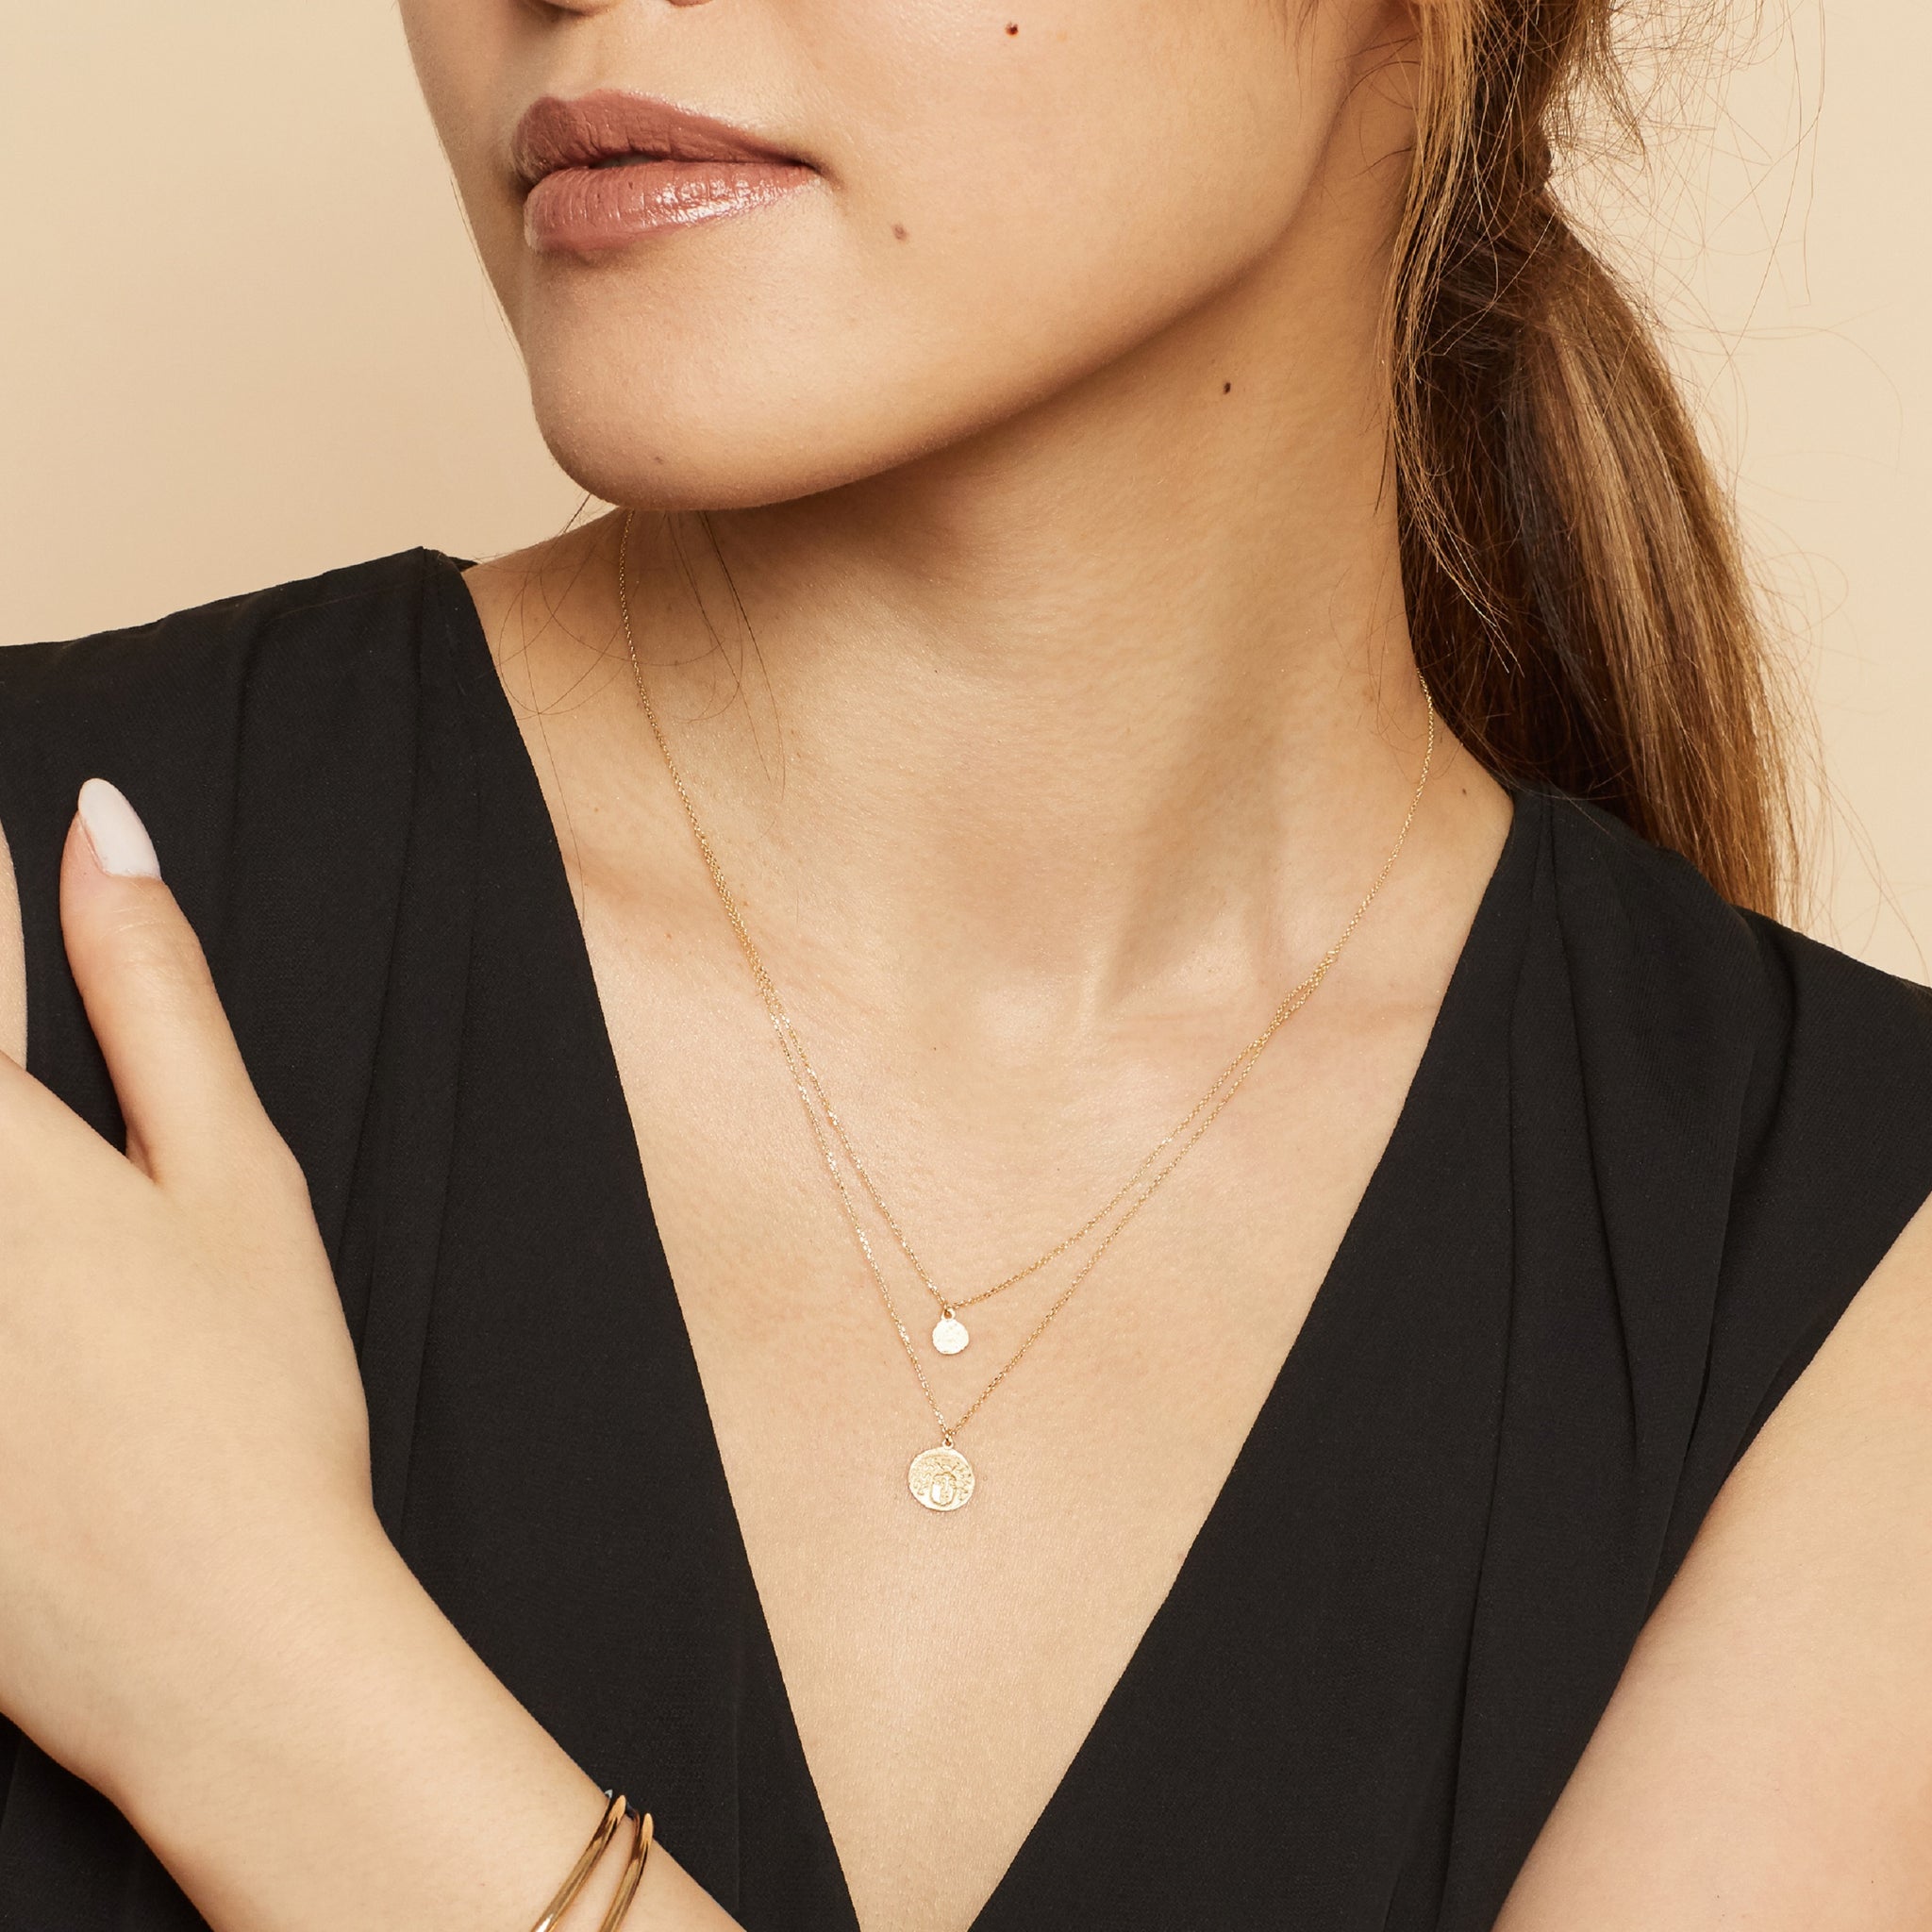 Greek Silver Necklace With Blue Opal Pendant 13x12mm | Sirioti Jewelry